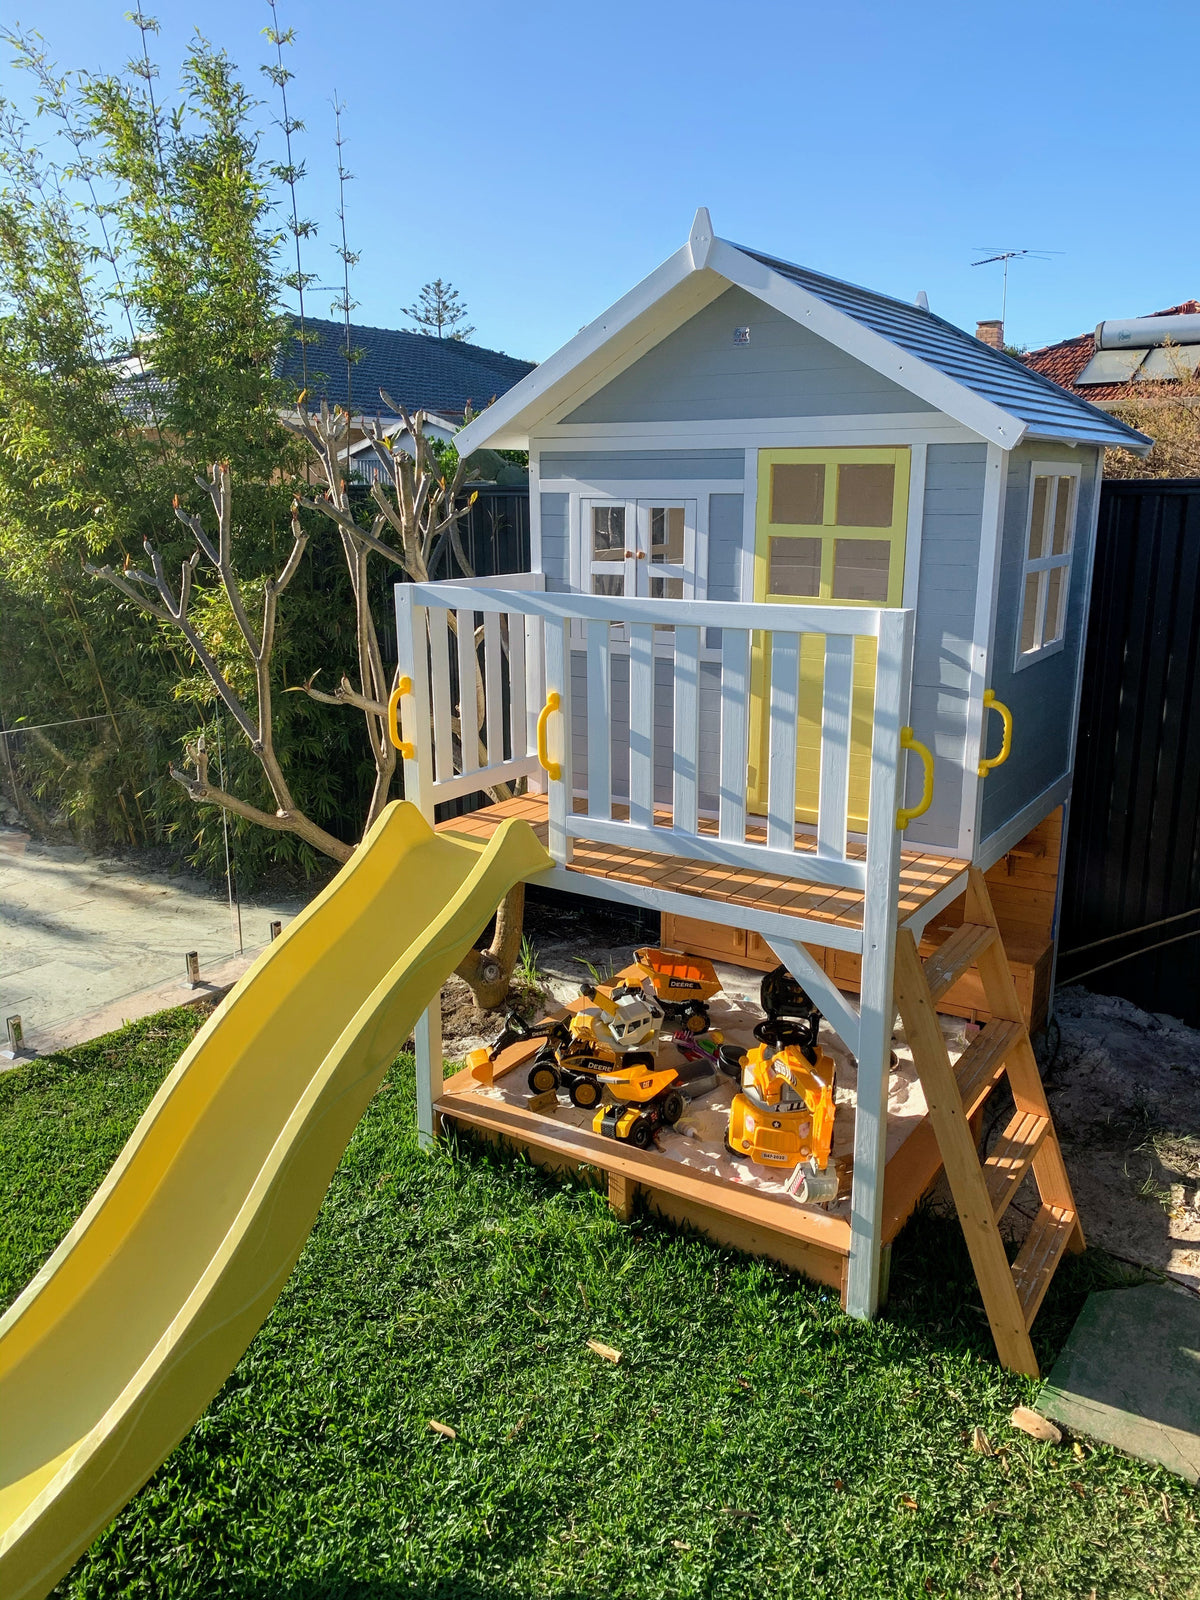 Buy The Sunshine Shack Cubby House With A Slide Kidzshack